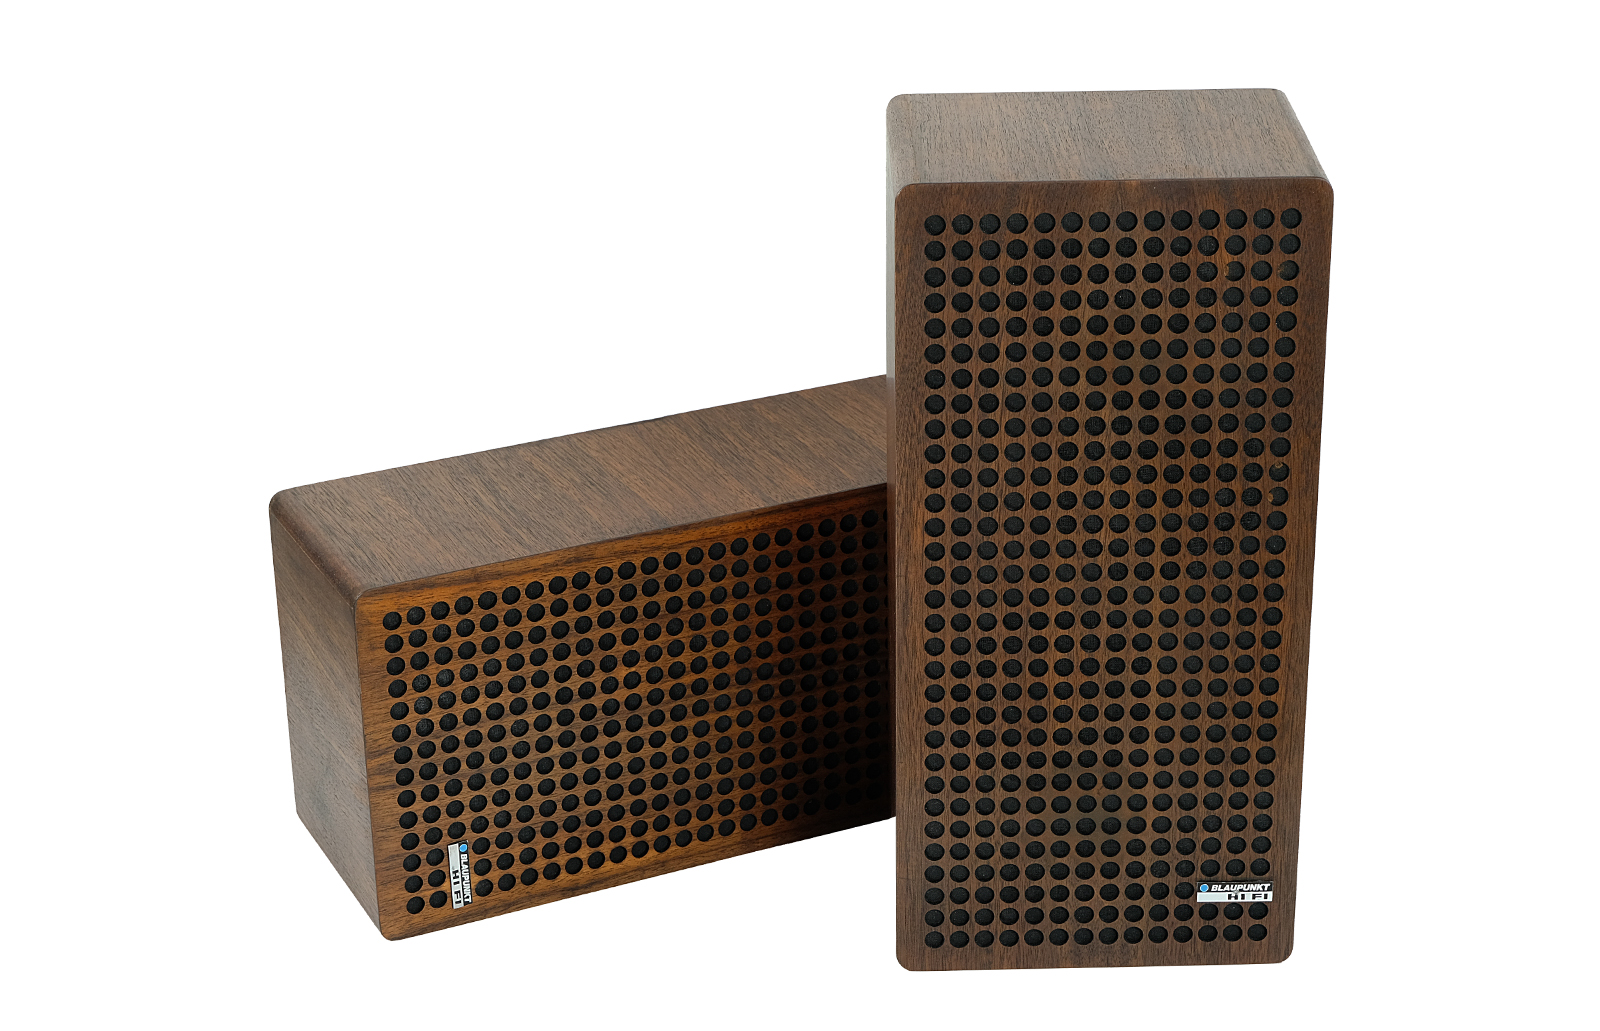 Blaupunkt LAB 308 speakers